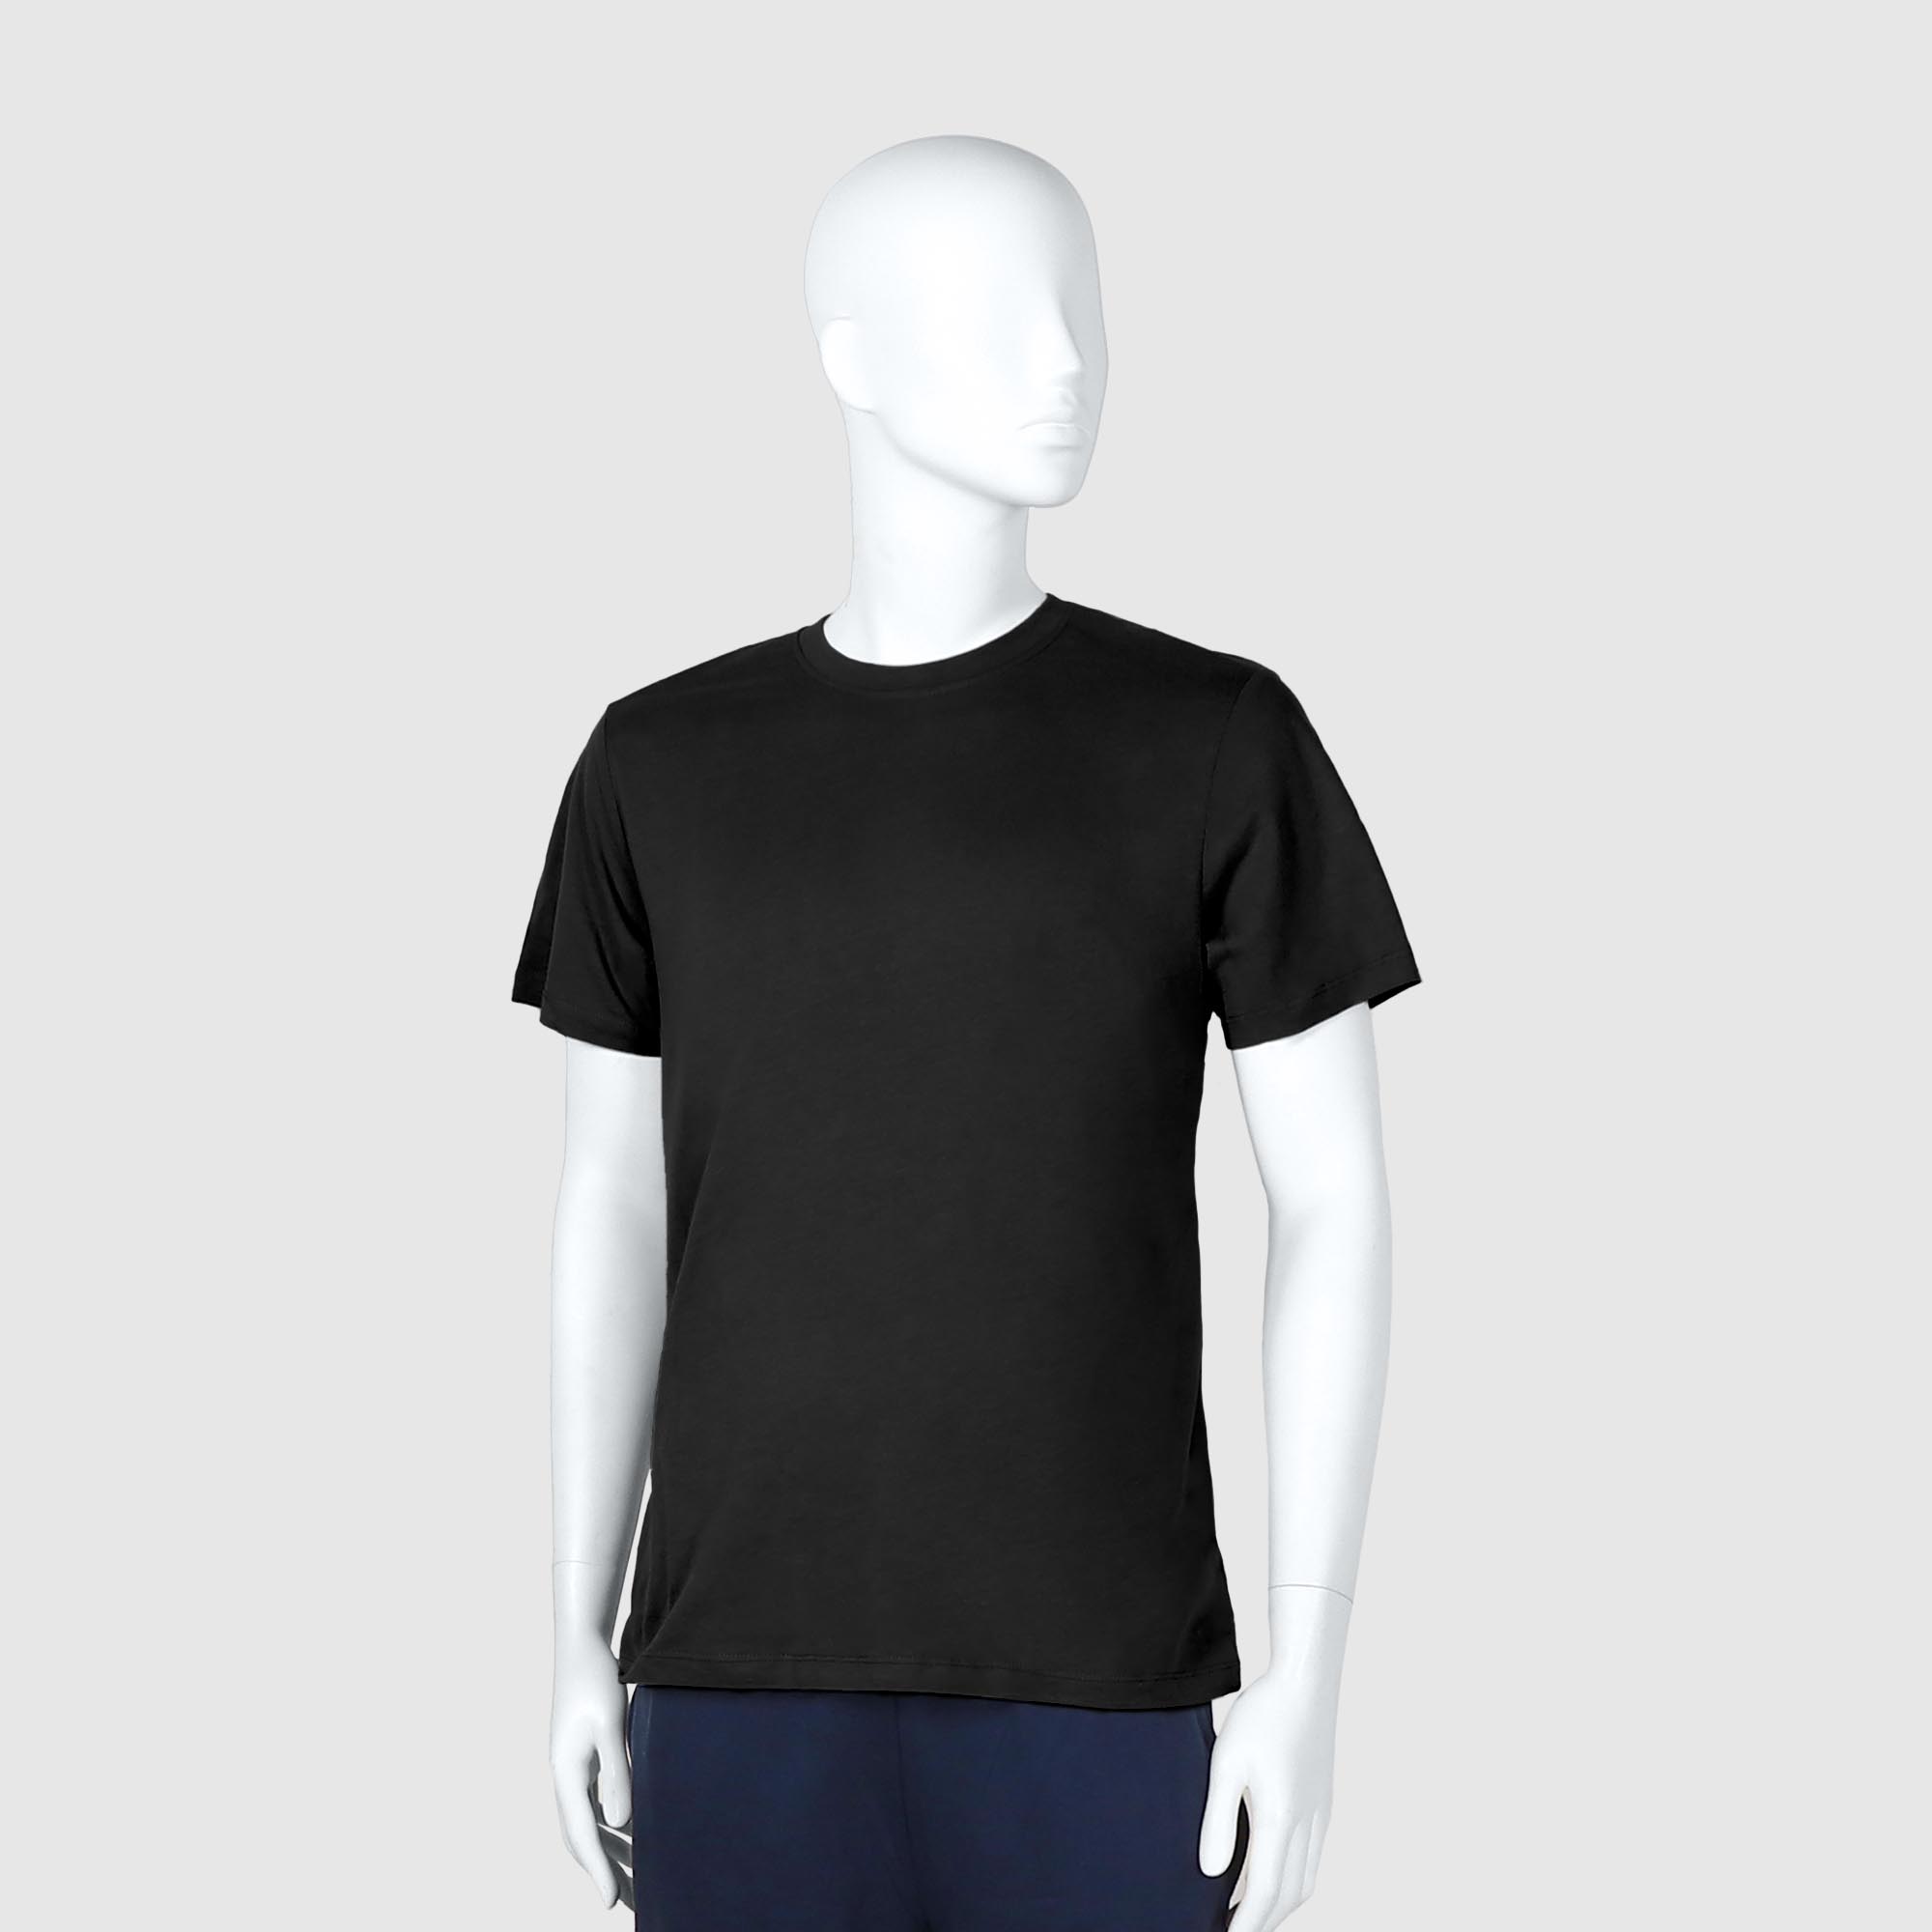 Мужская футболка Diva Teks чёрная (DTD-01), цвет чёрный, размер 44-46